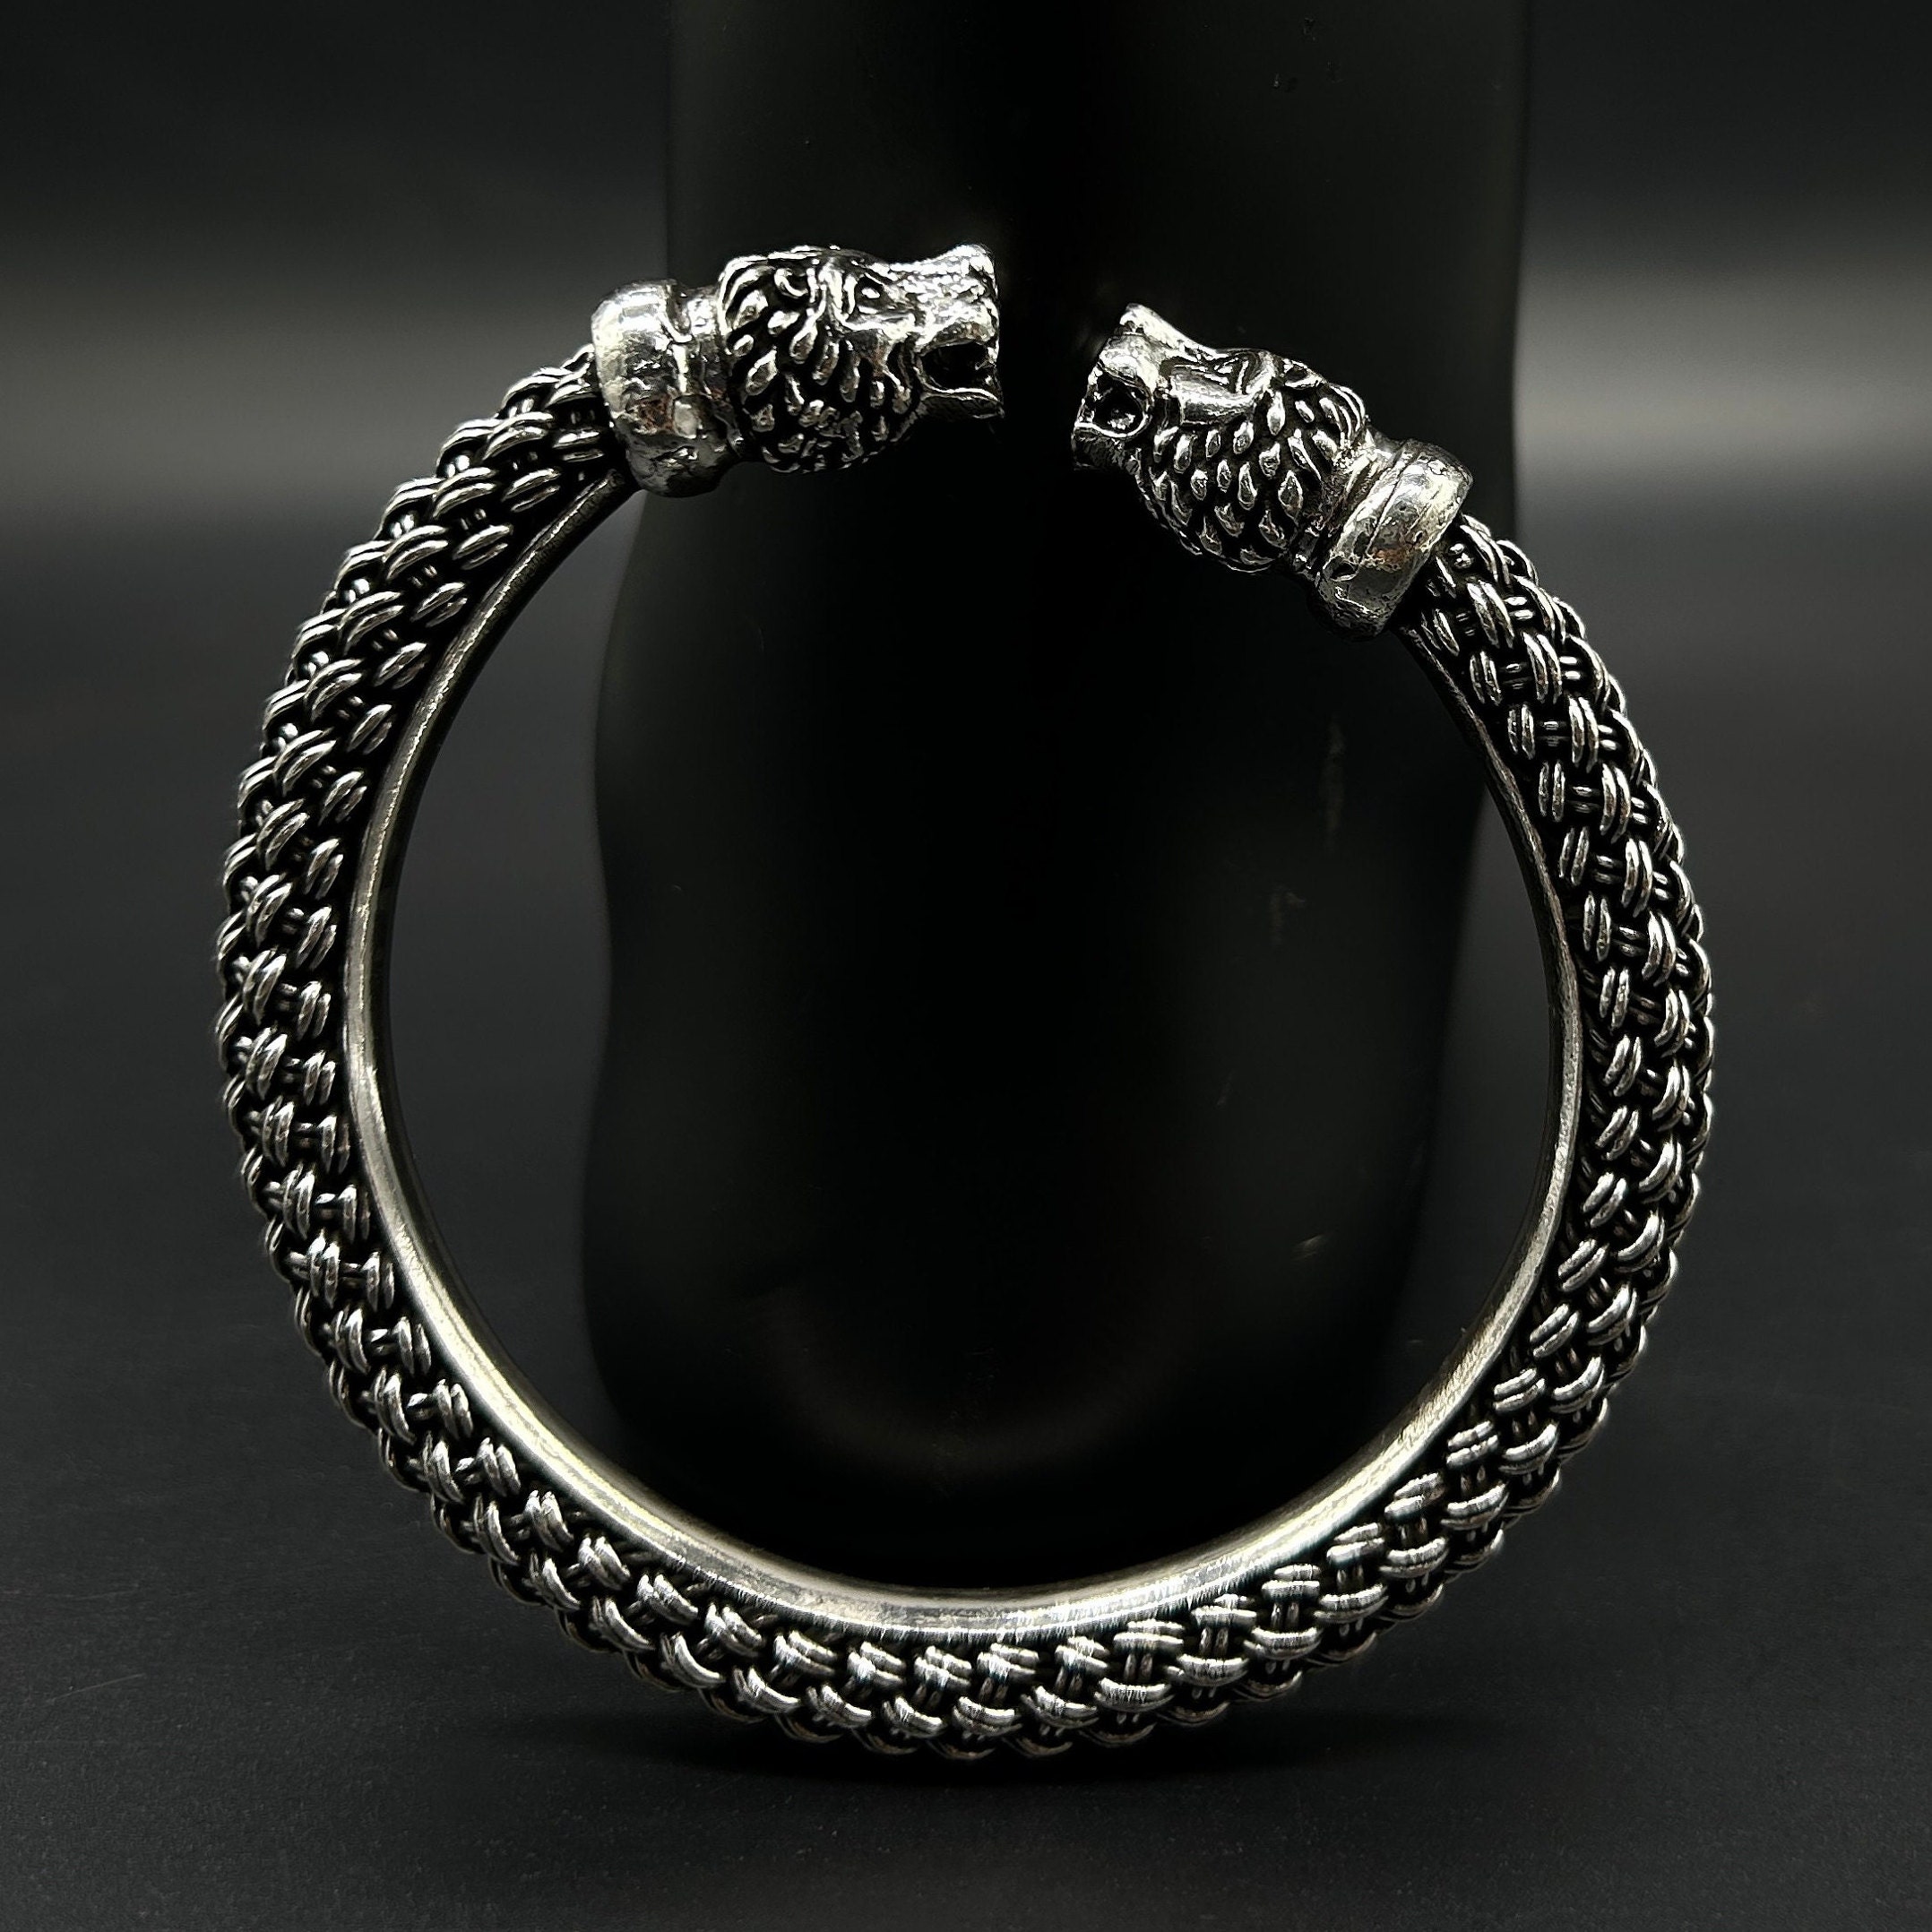 Men's Silver Rope Bracelet (2.5mm) - Silver Bracelet For Men |  Twistedpendant